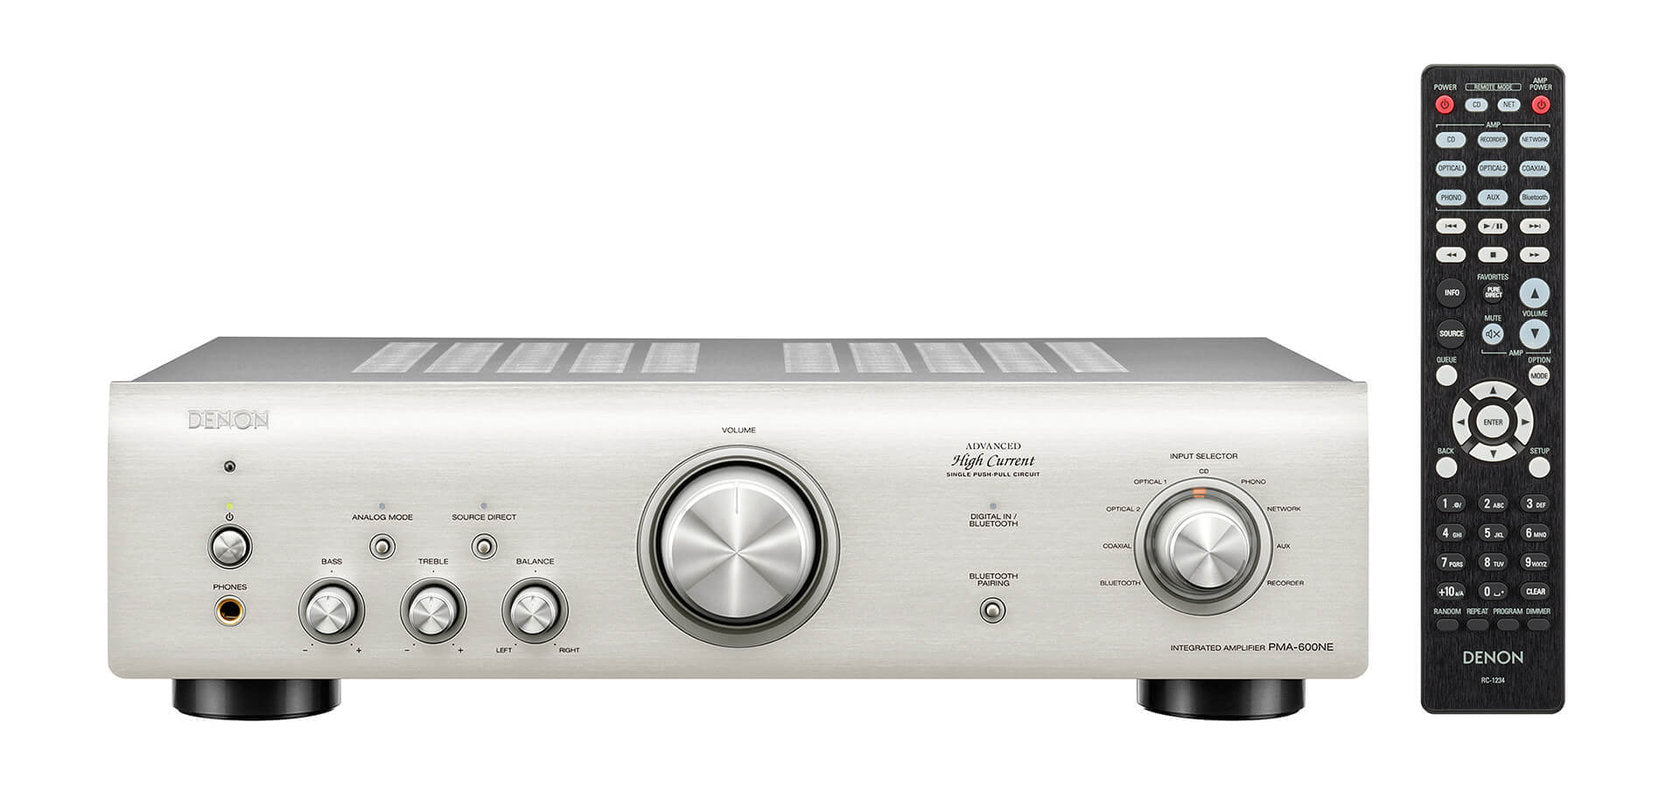 Denon PMA-600NE stereo amplifier